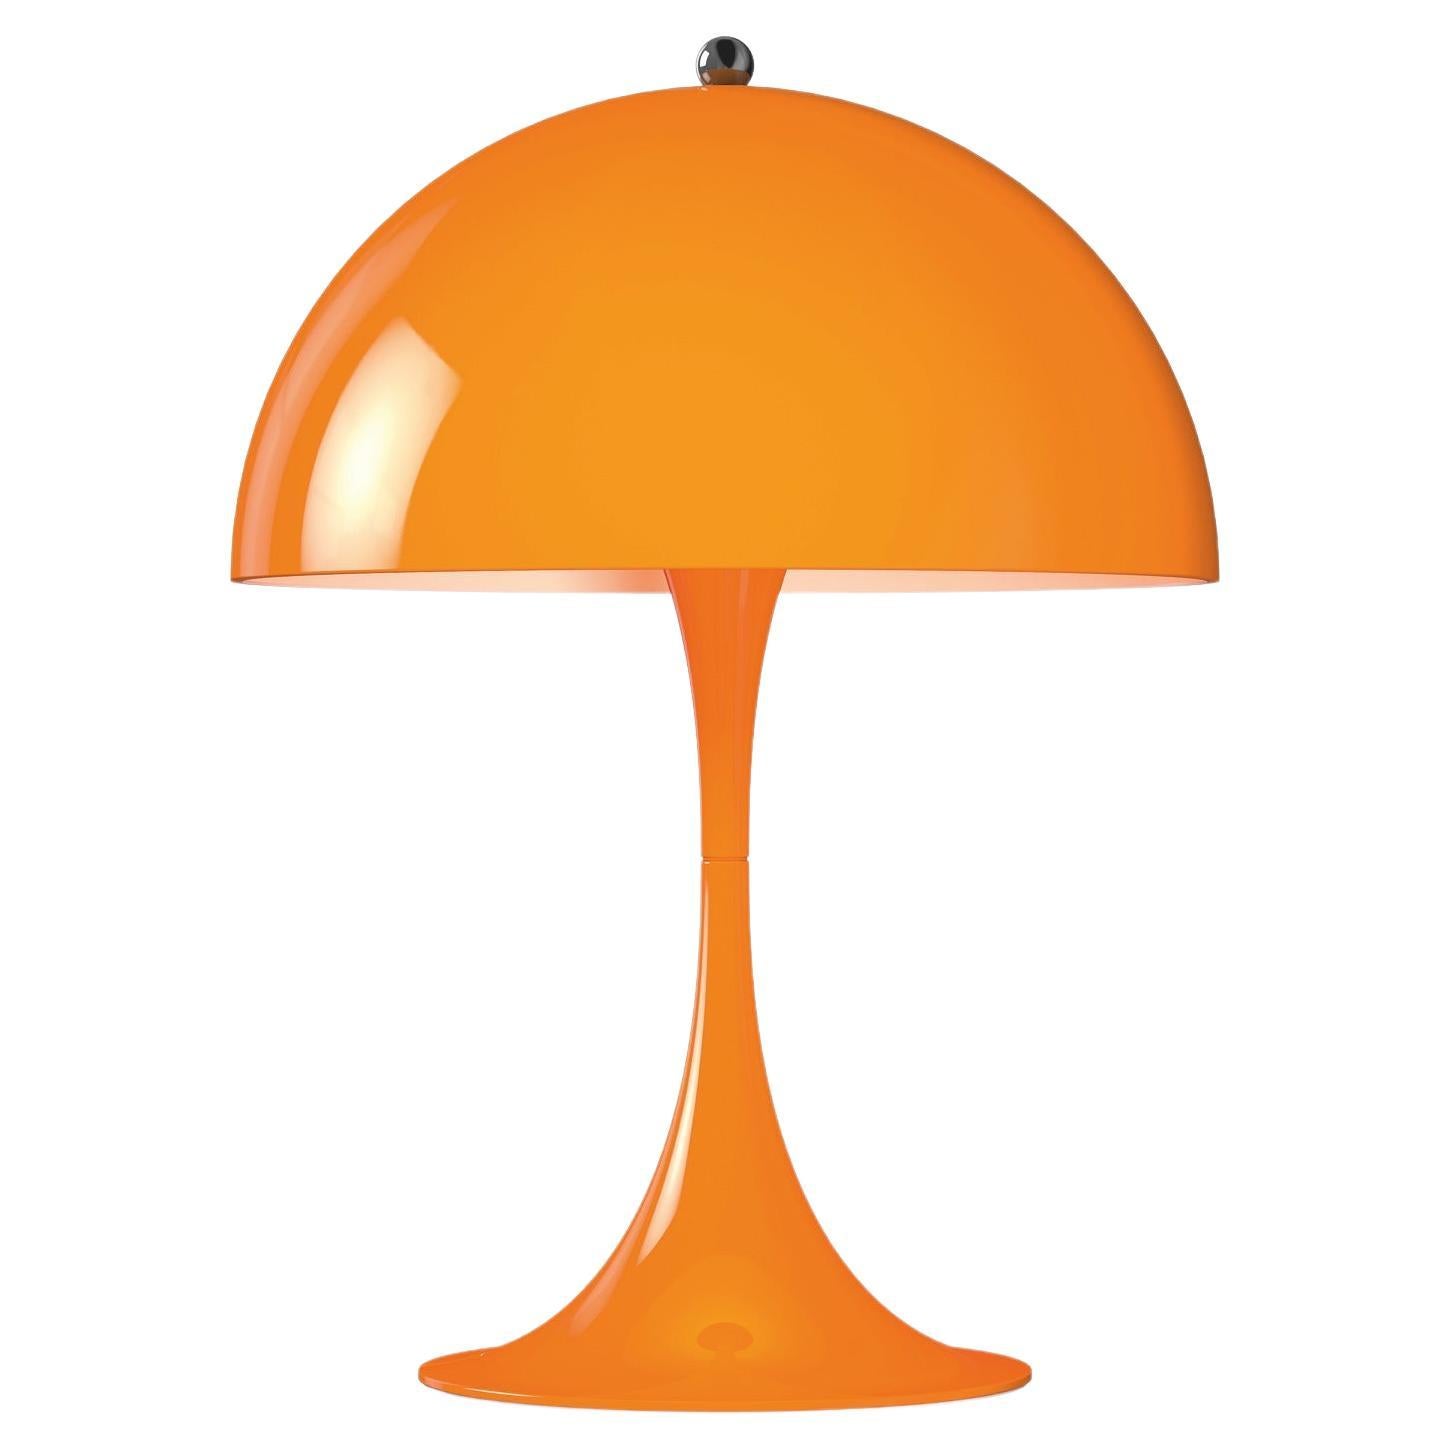 Louis Poulsen Panthella 250 Table Lamp in Orange by Verner Panton For Sale